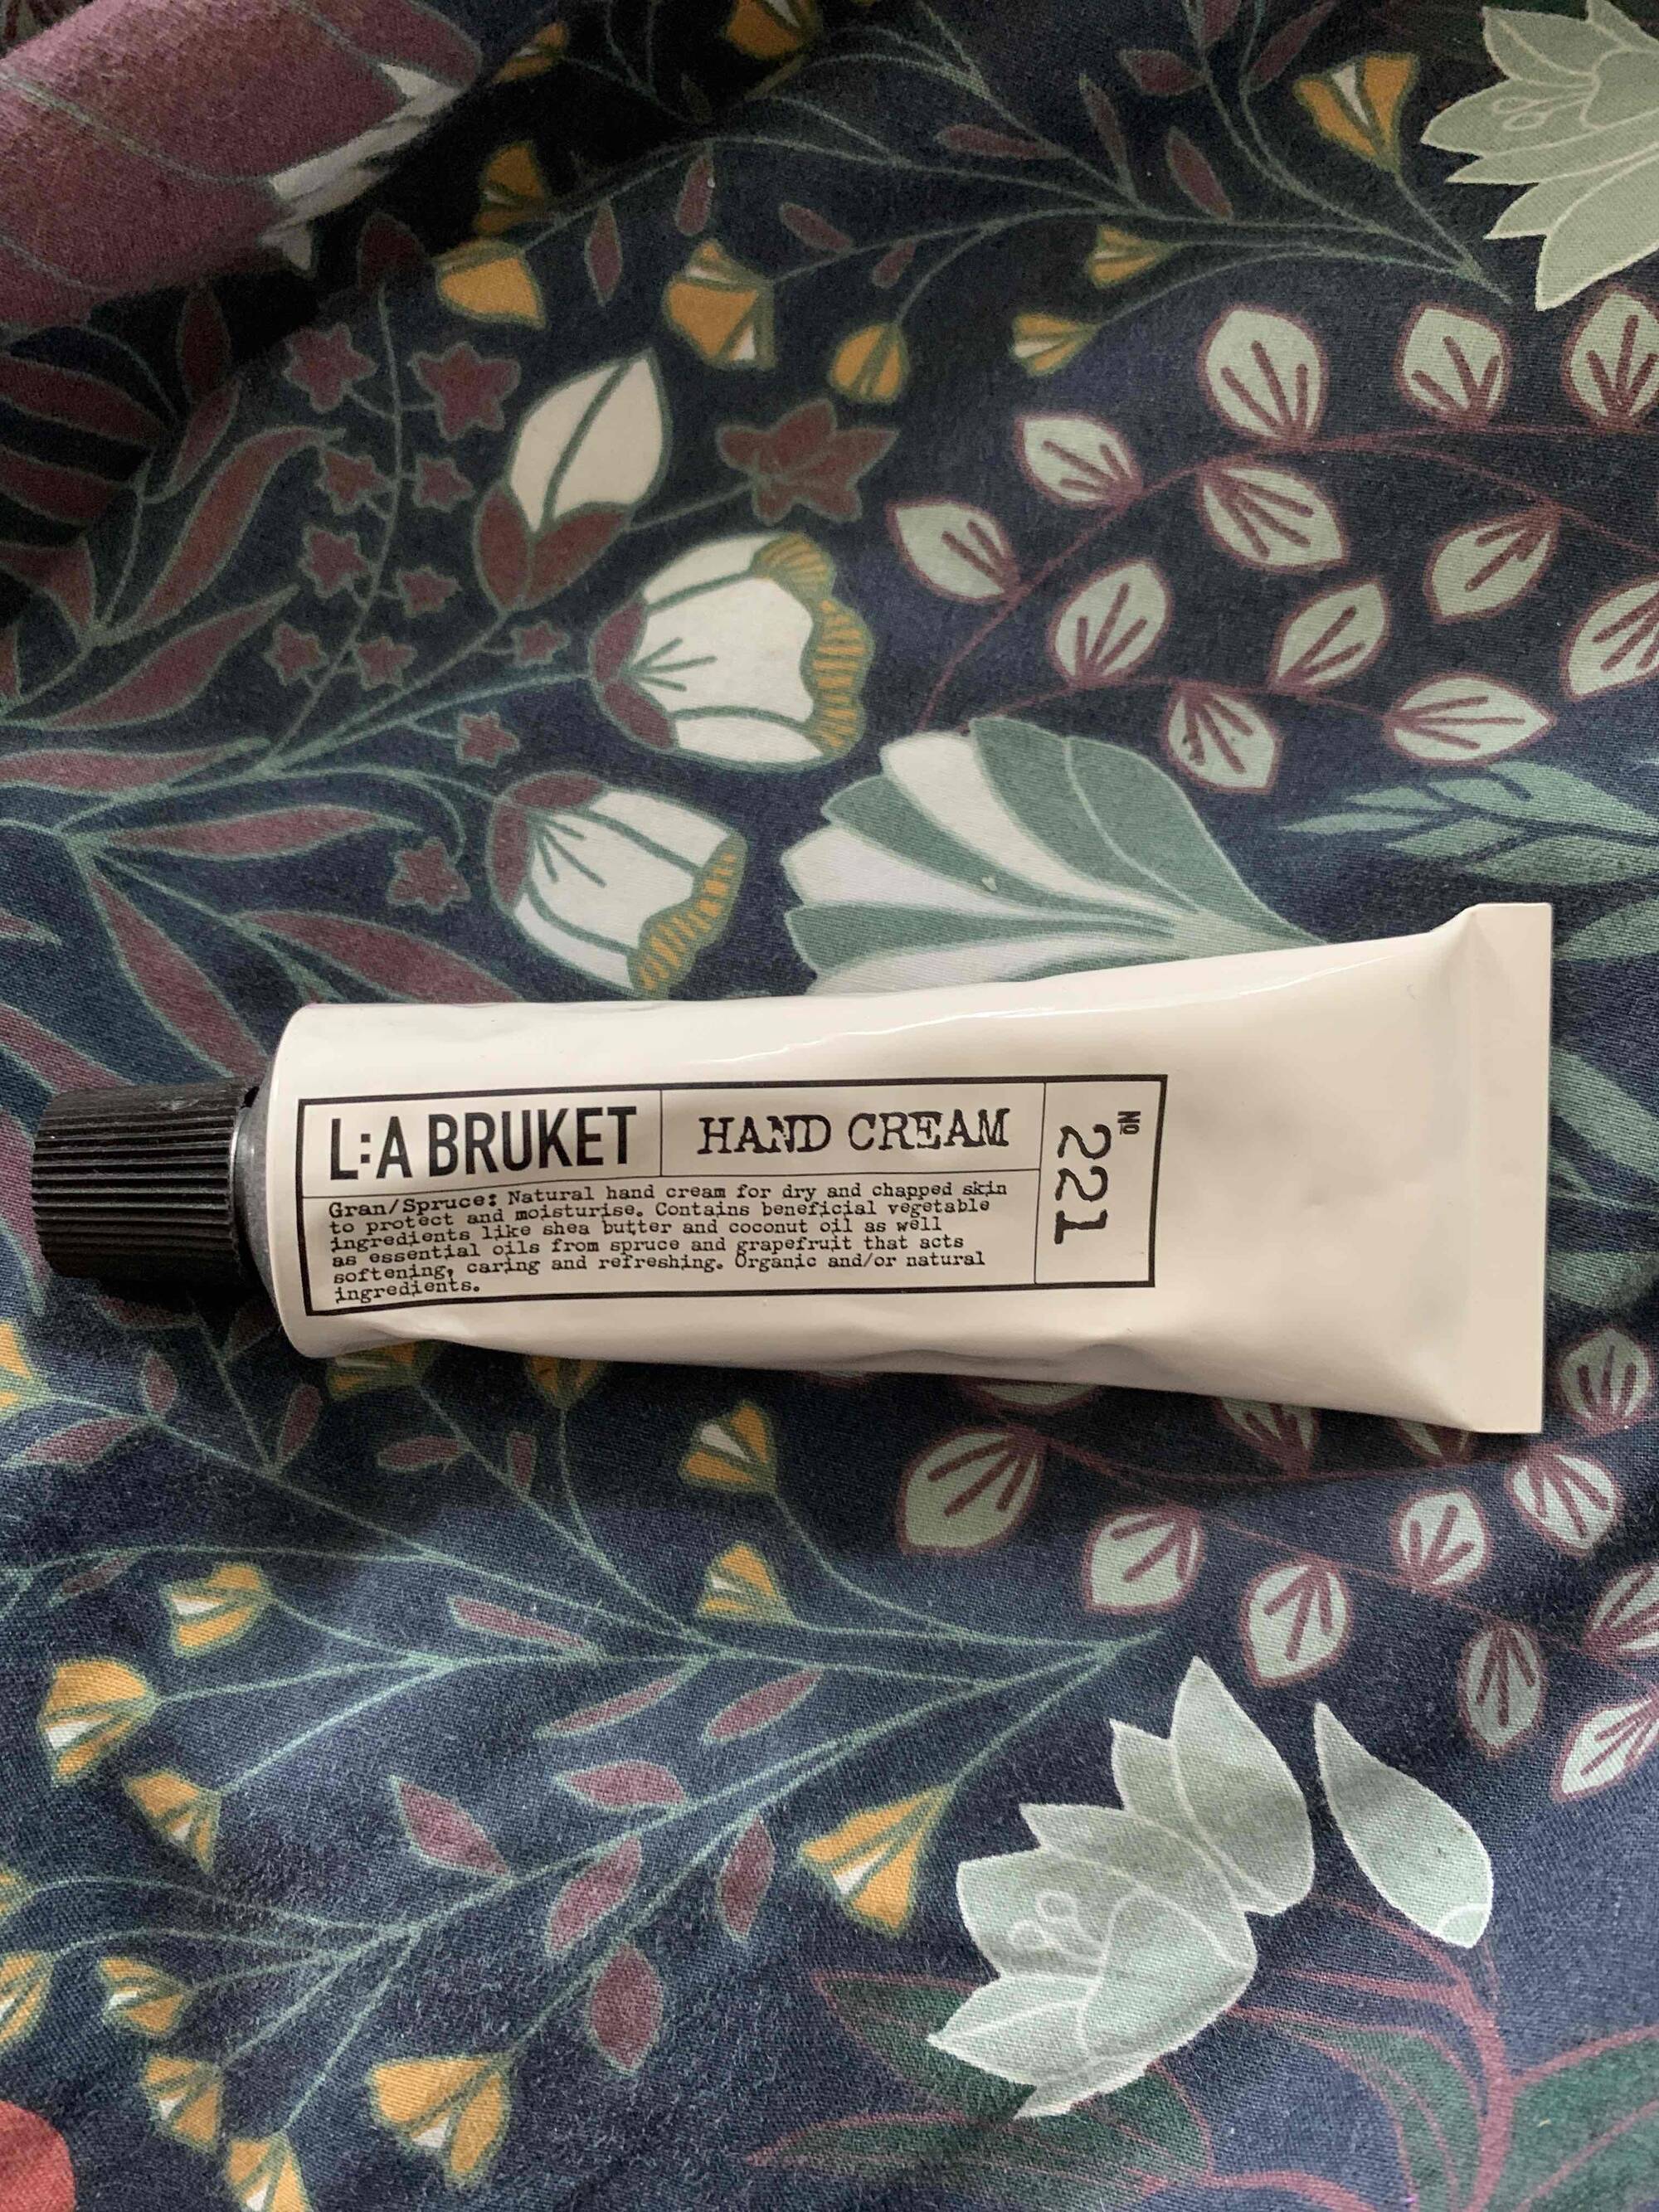 L:A BRUKET - Hand cream